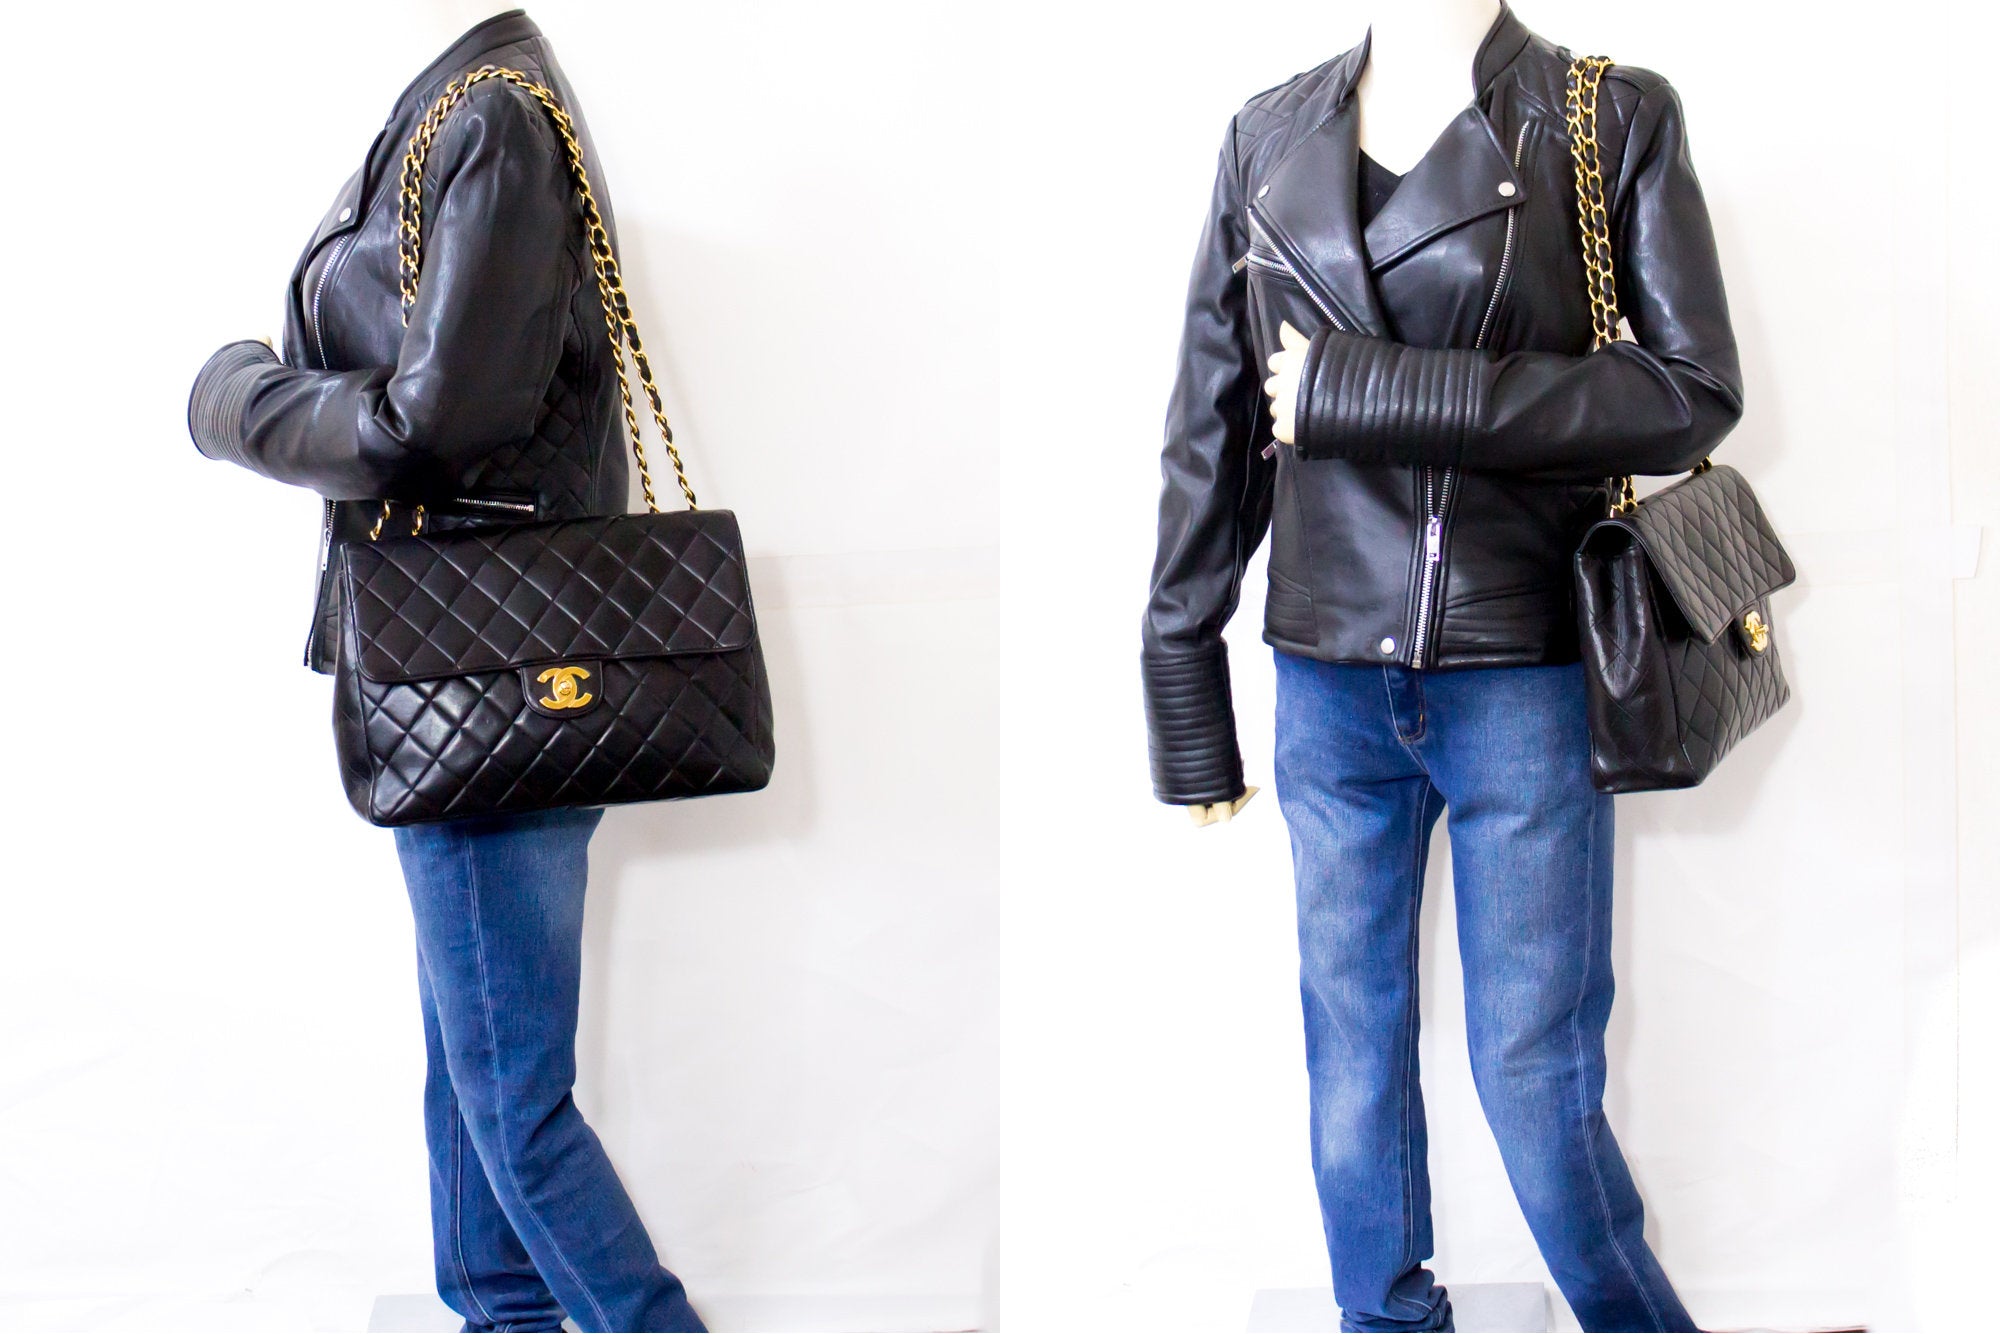 Chanel Chanel Jumbo XL Black Leather Shoulder Shopping Tote Bag